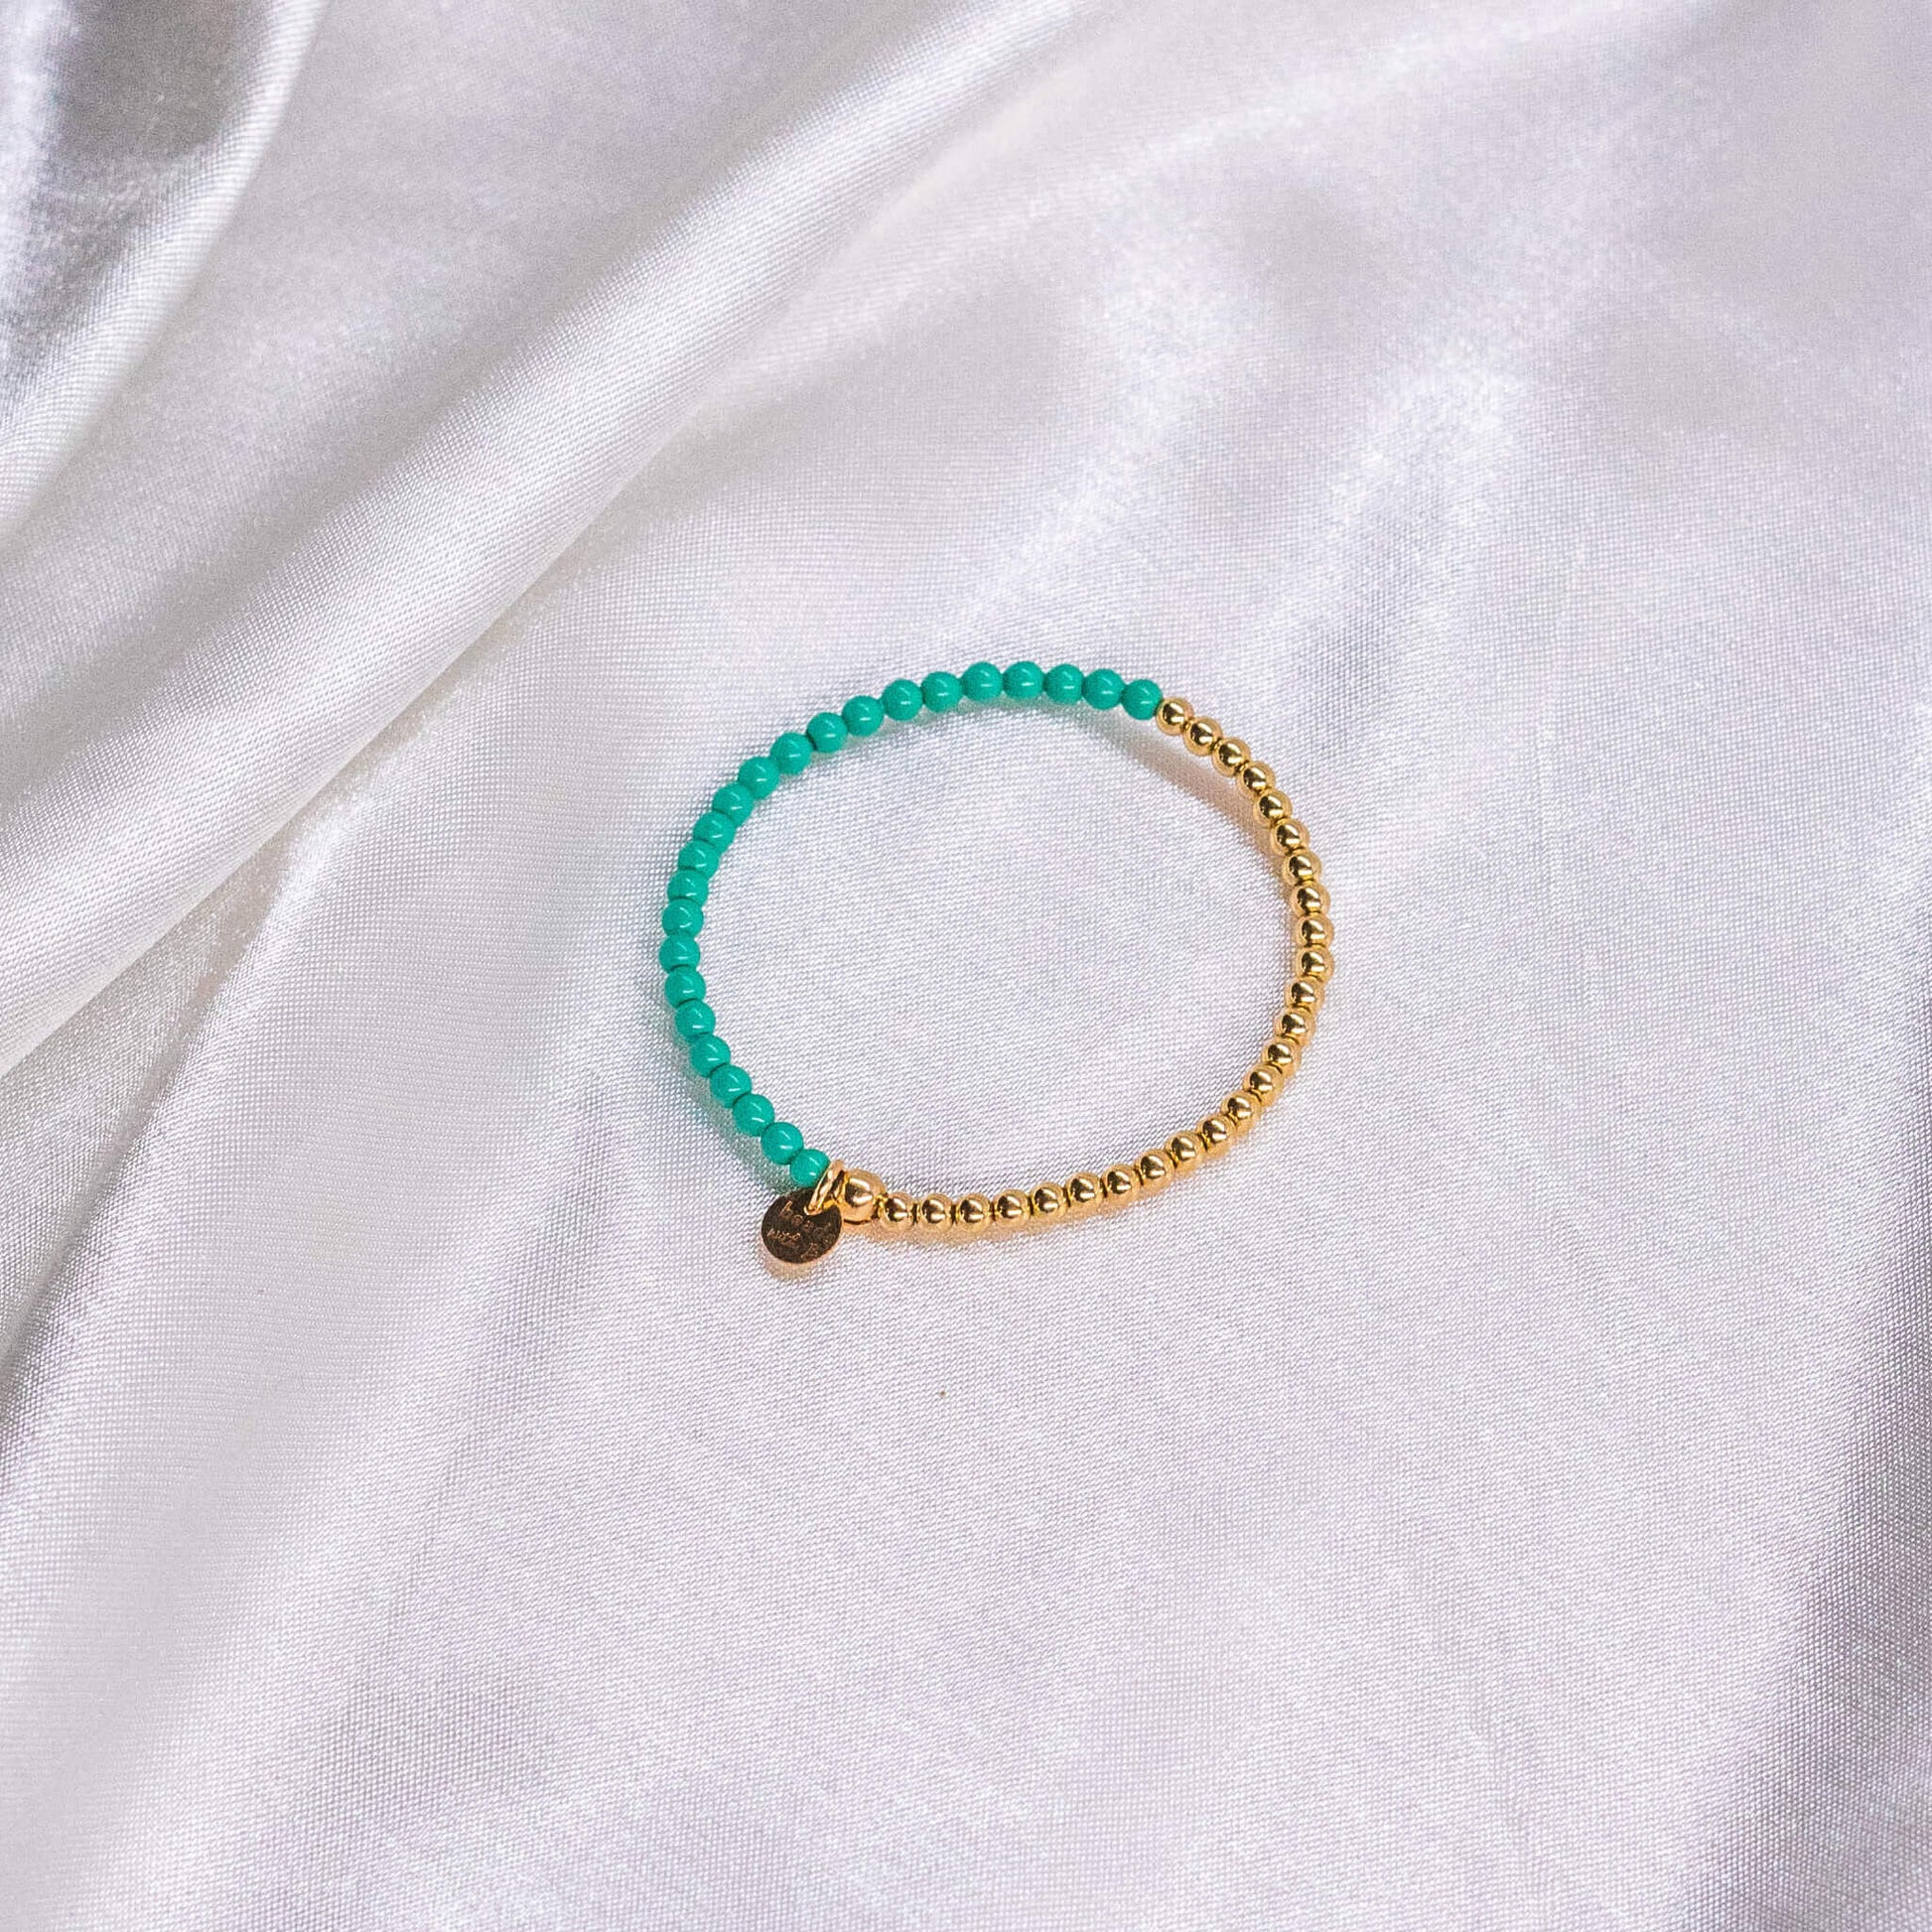 Simple Red String Bracelet with 14K Gold Bead 14K Rose Gold / Green